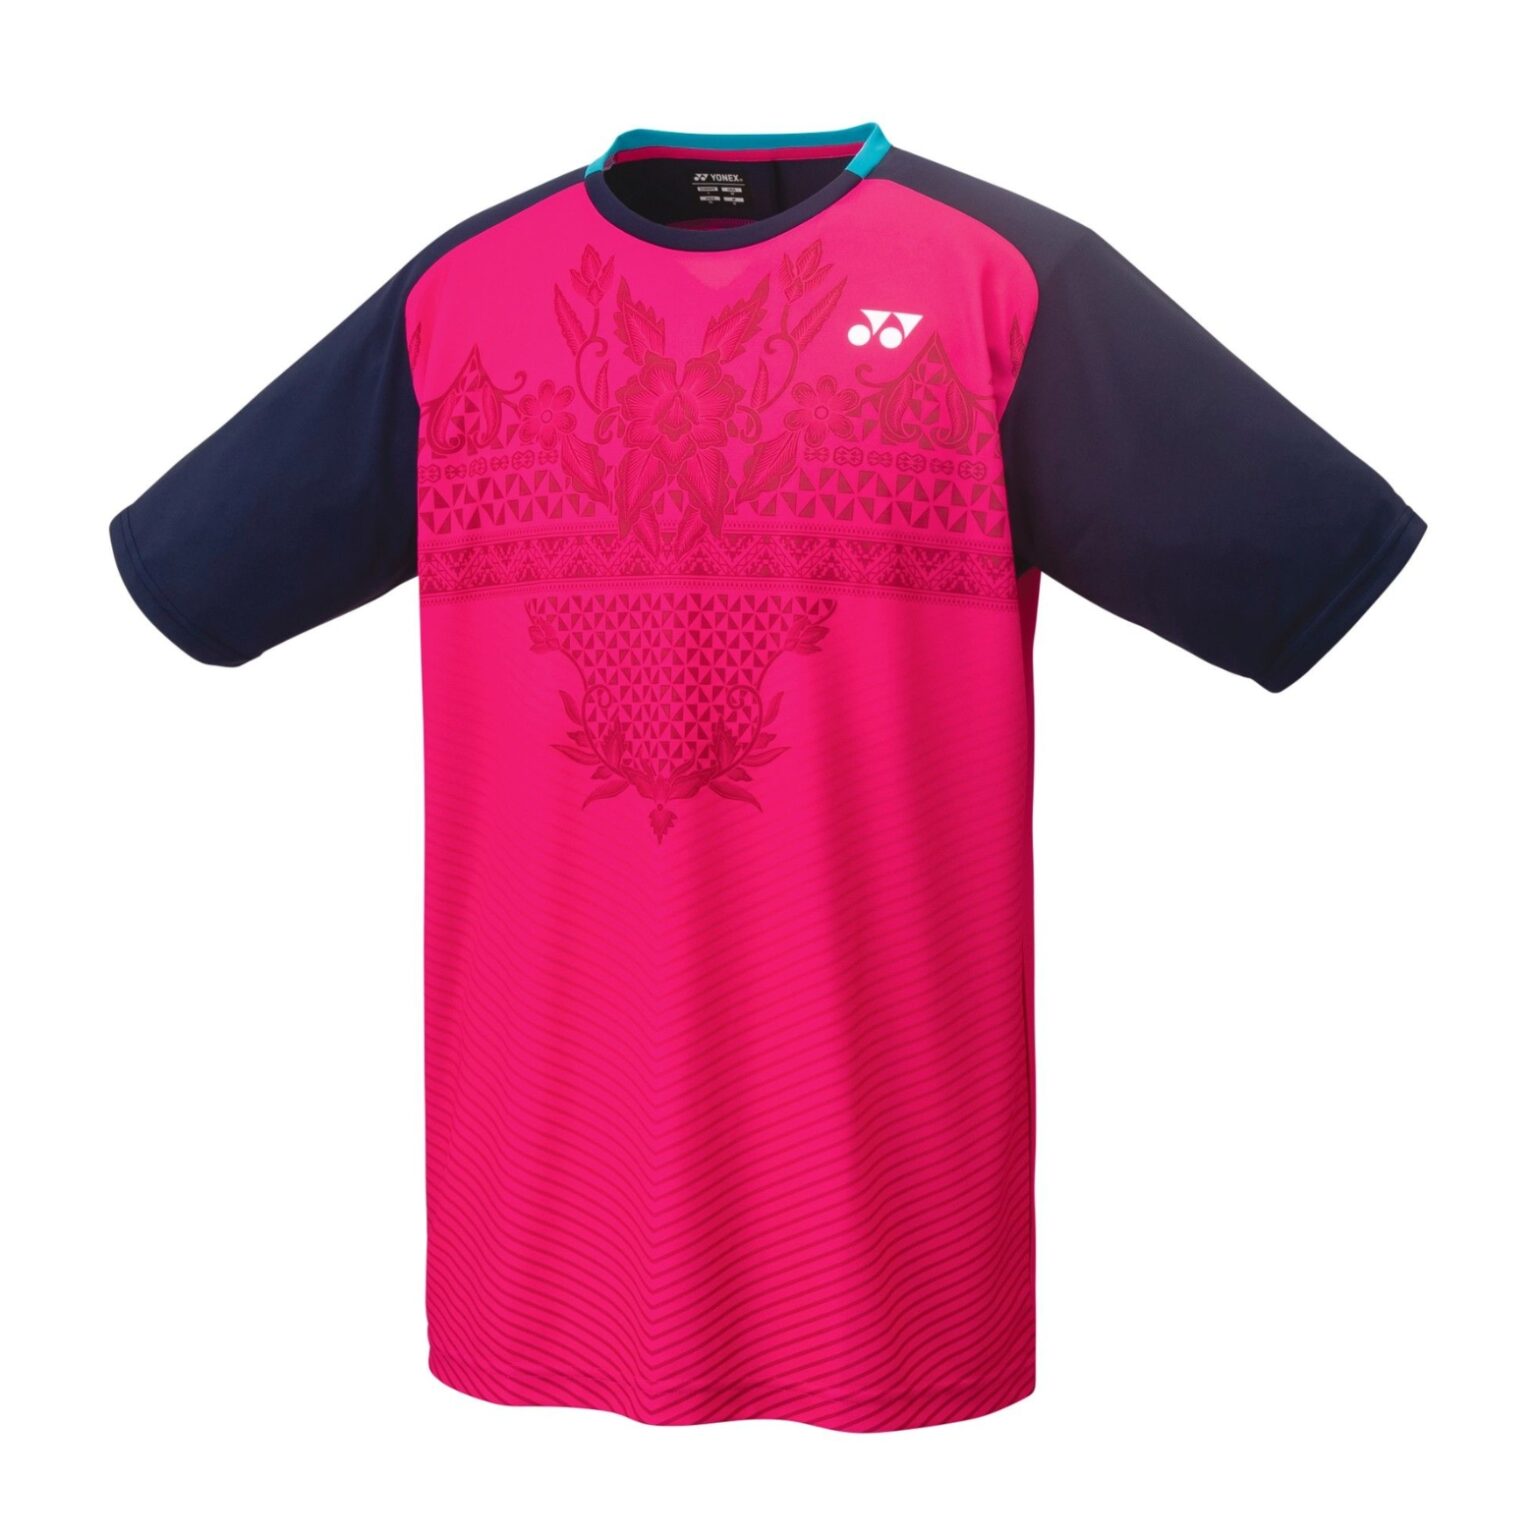 Yonex T-shirt 16573EX | Badminton T-shirt ⇒ Low price